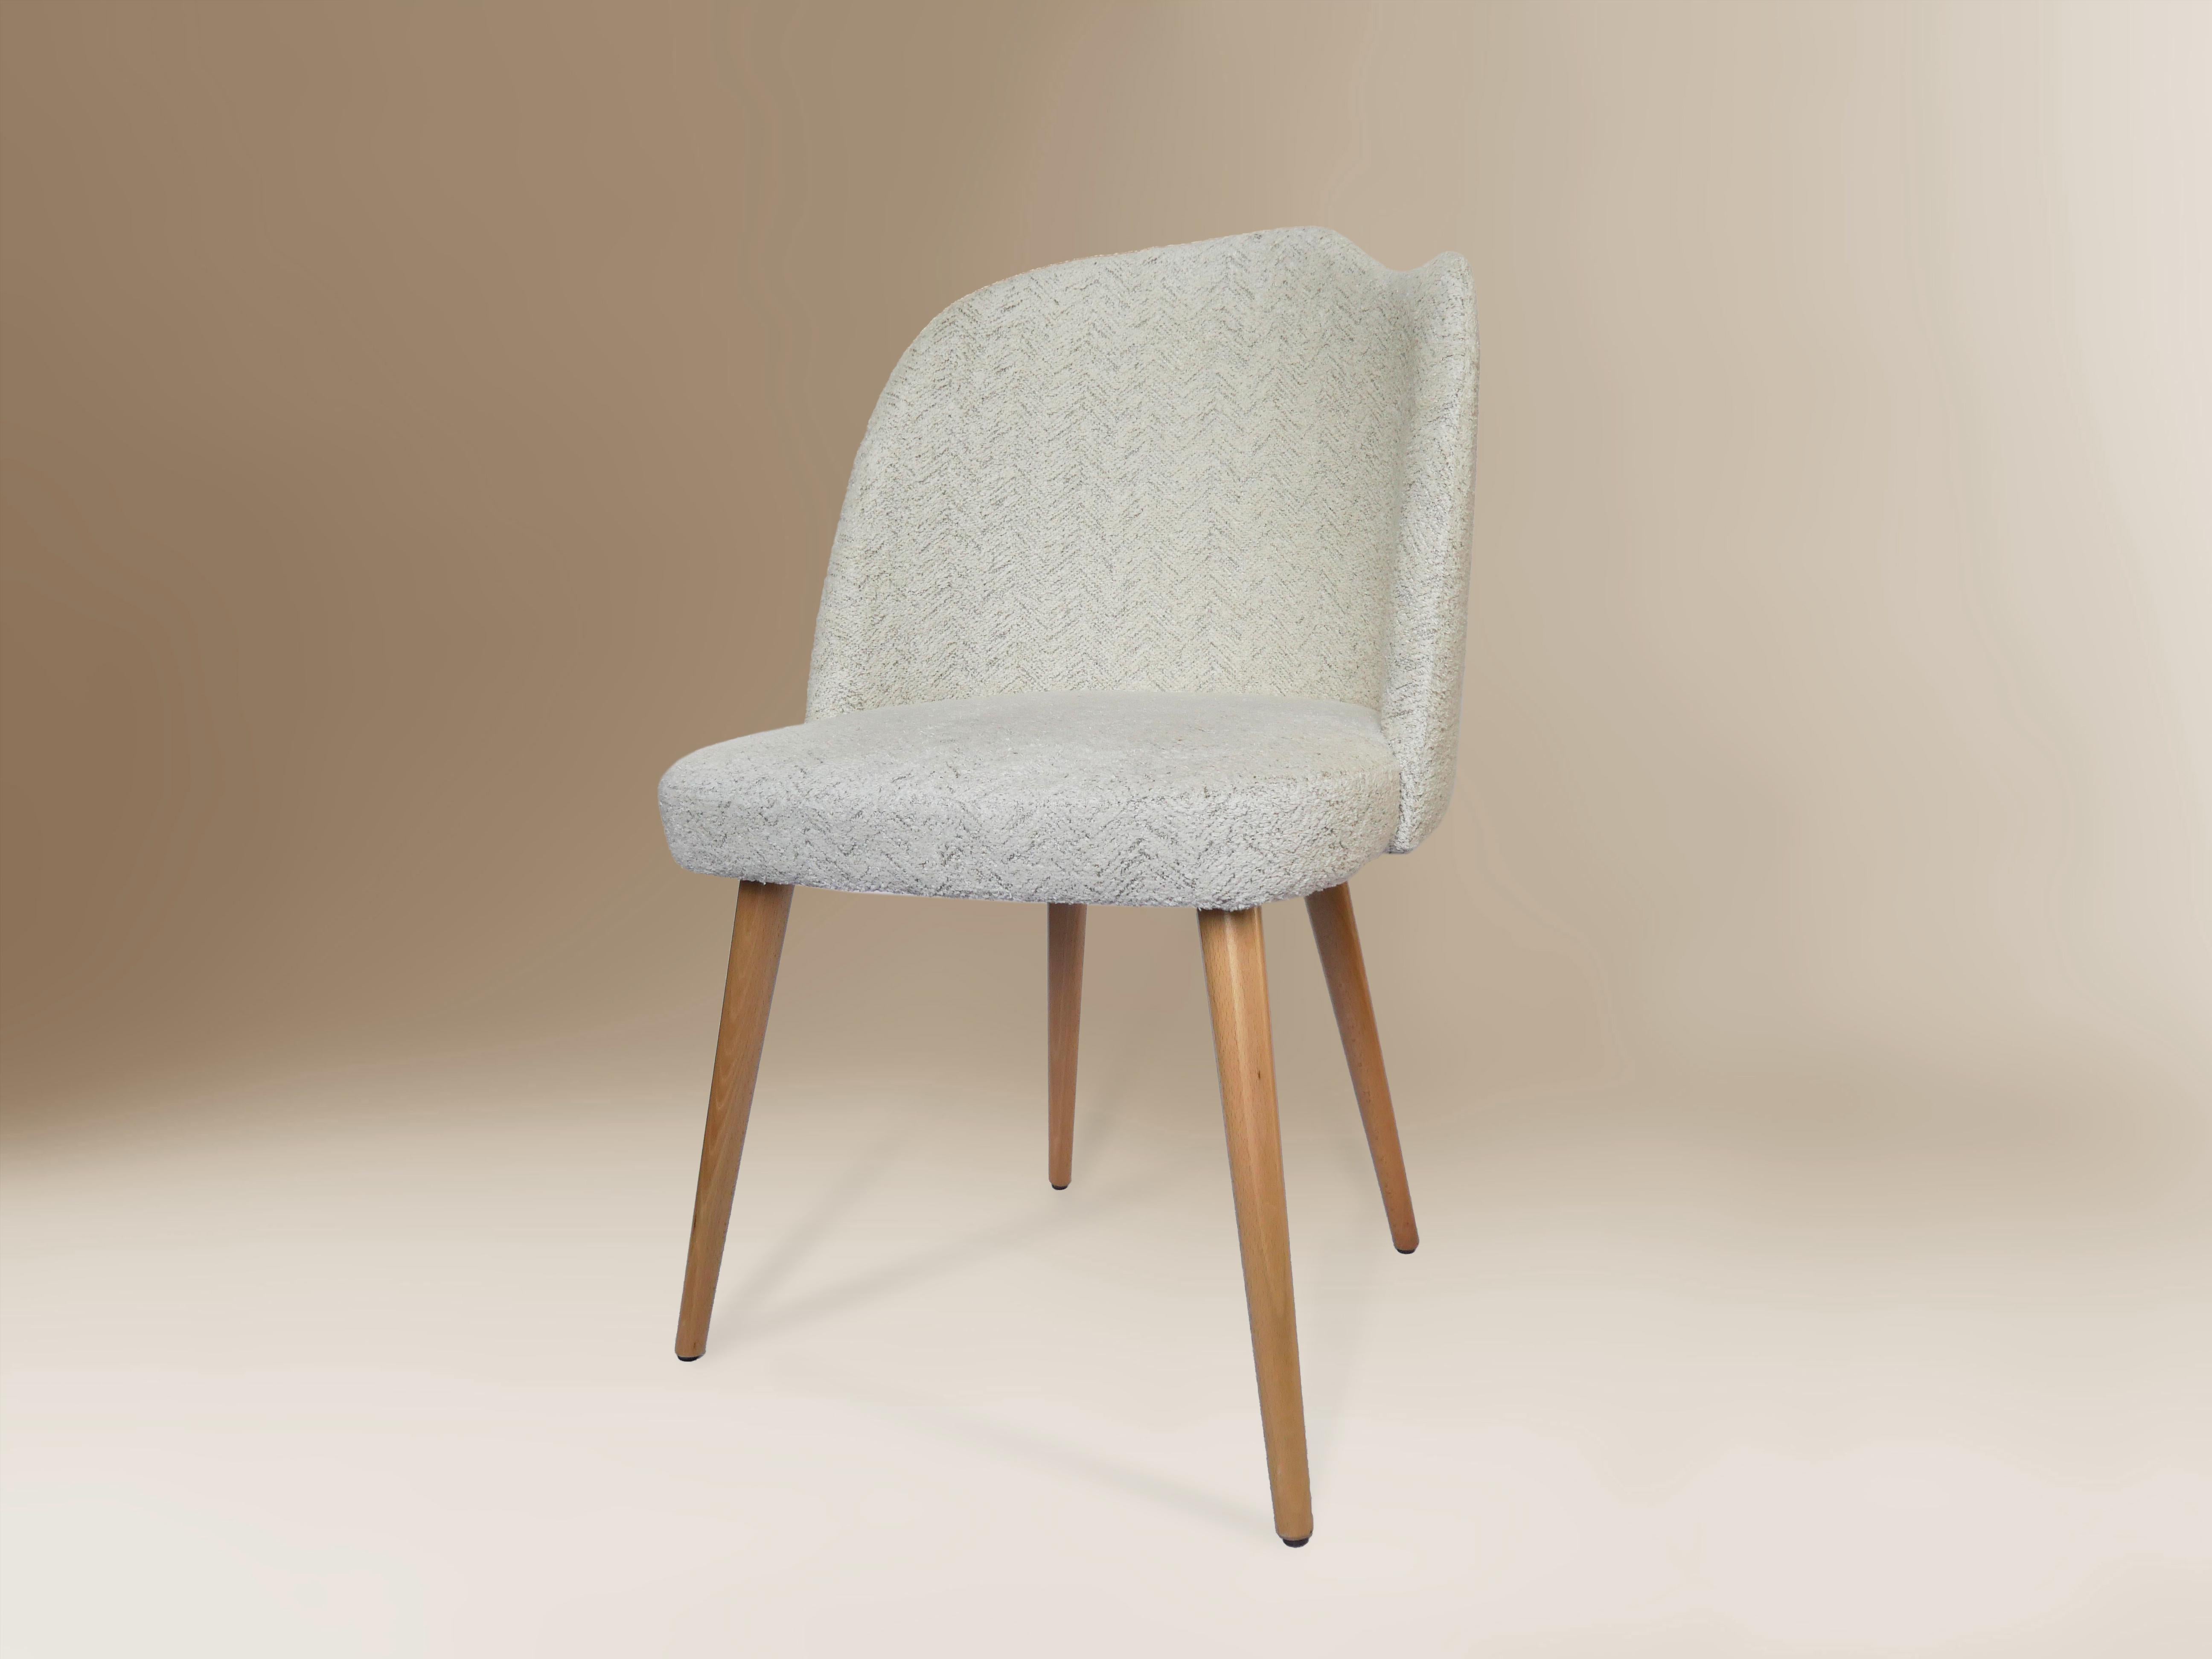 White Yves chair by Dovain Studio
Dimensions: H 85 x W 54 x D 54 x SH 49 cm
Materials: velvet, wood

Dovain studio
Creative direction by Sergio Prieto, a Spanish artist-designer who was born in Talavera de la Reina in 1994. He dedicated himself